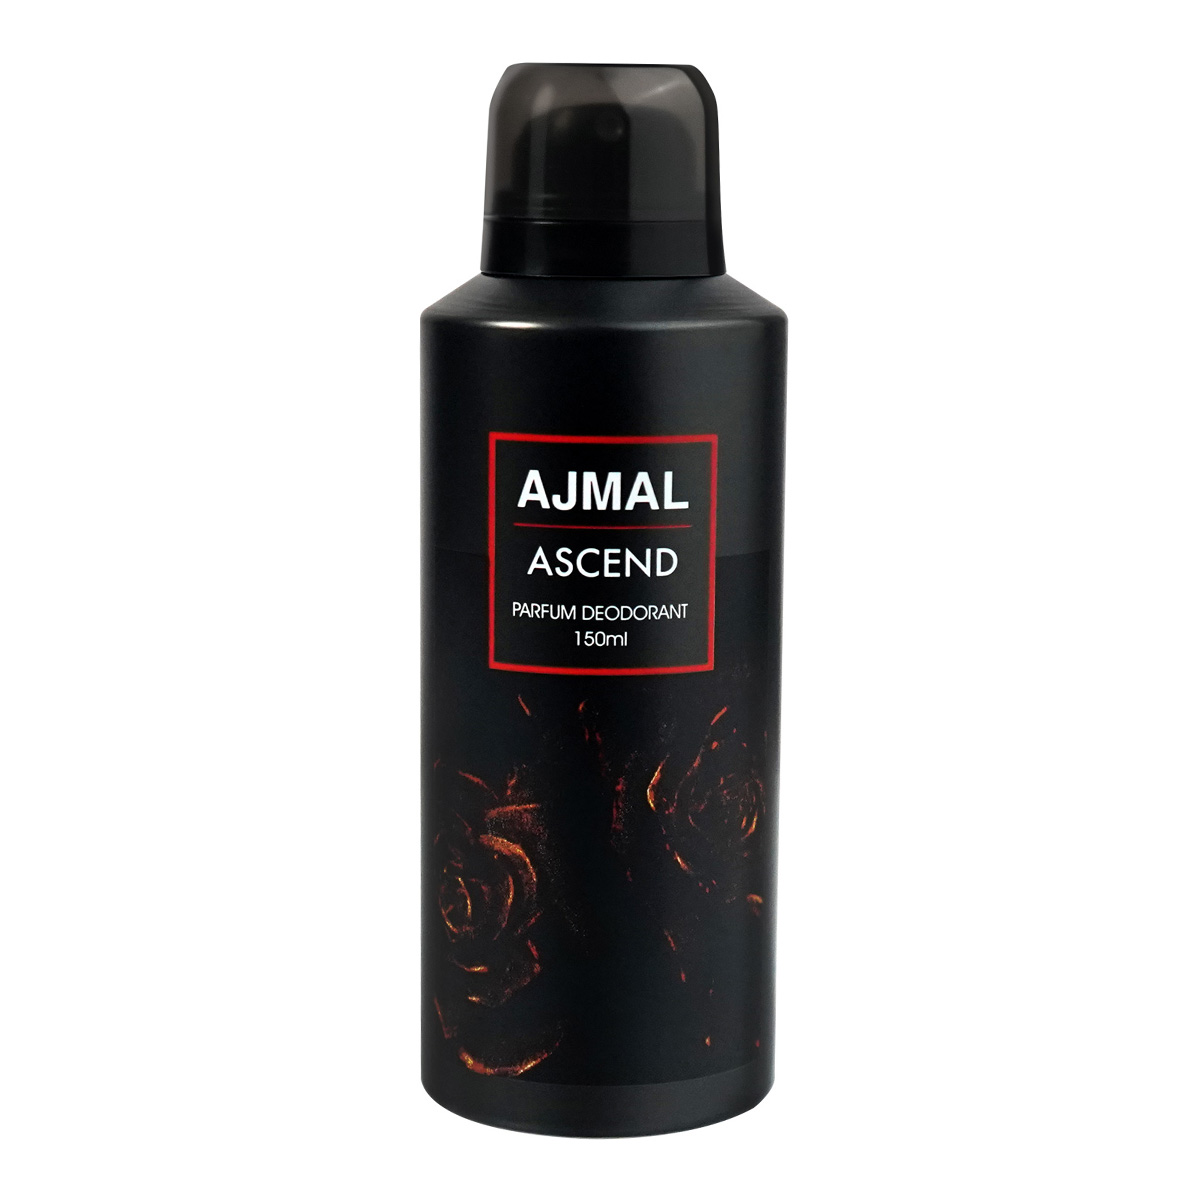 Ajmal Ascend Parfum Deodorant, 150ml